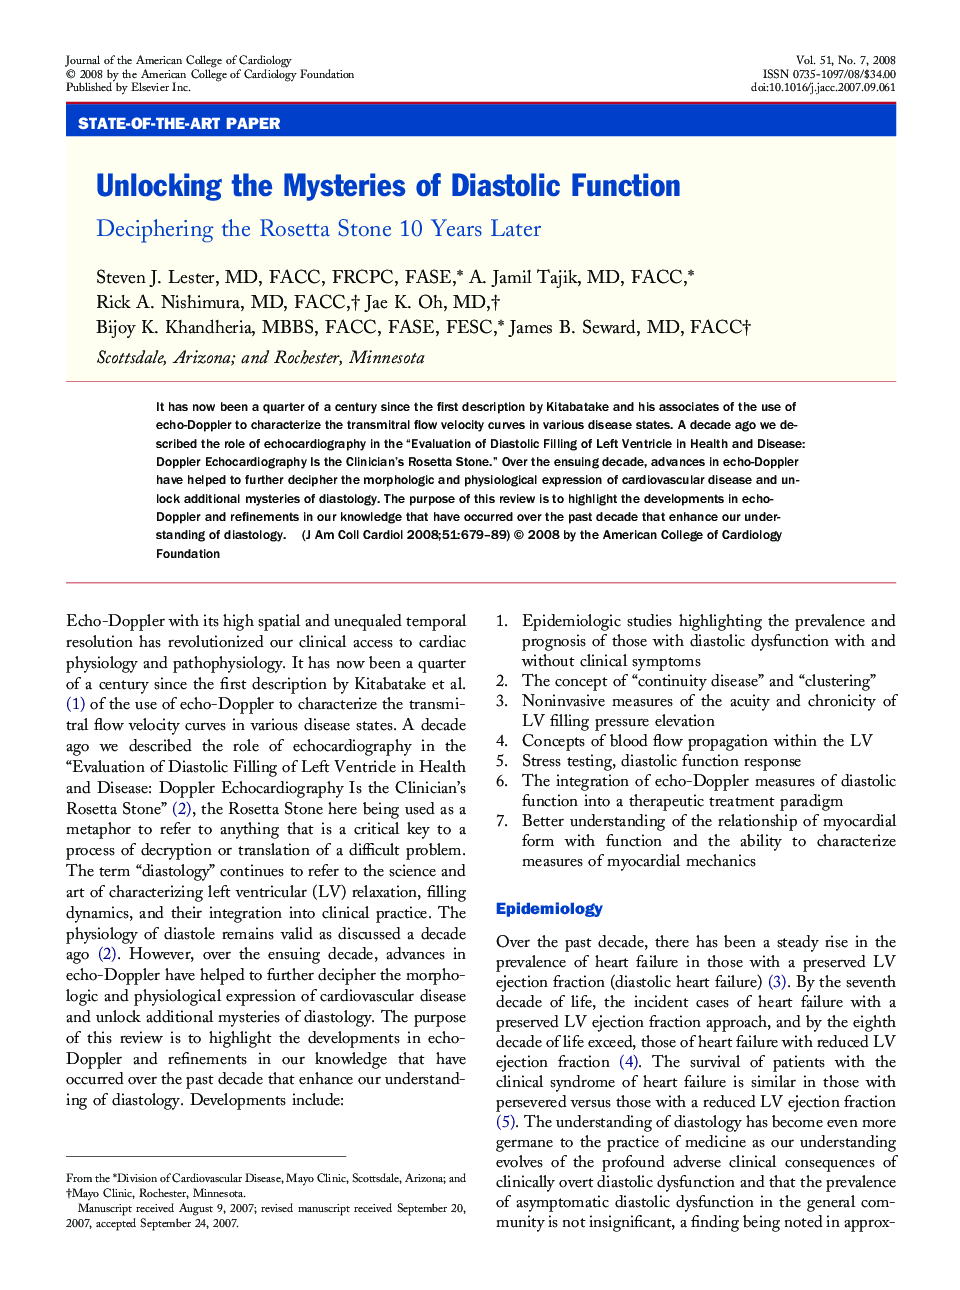 Unlocking the Mysteries of Diastolic Function